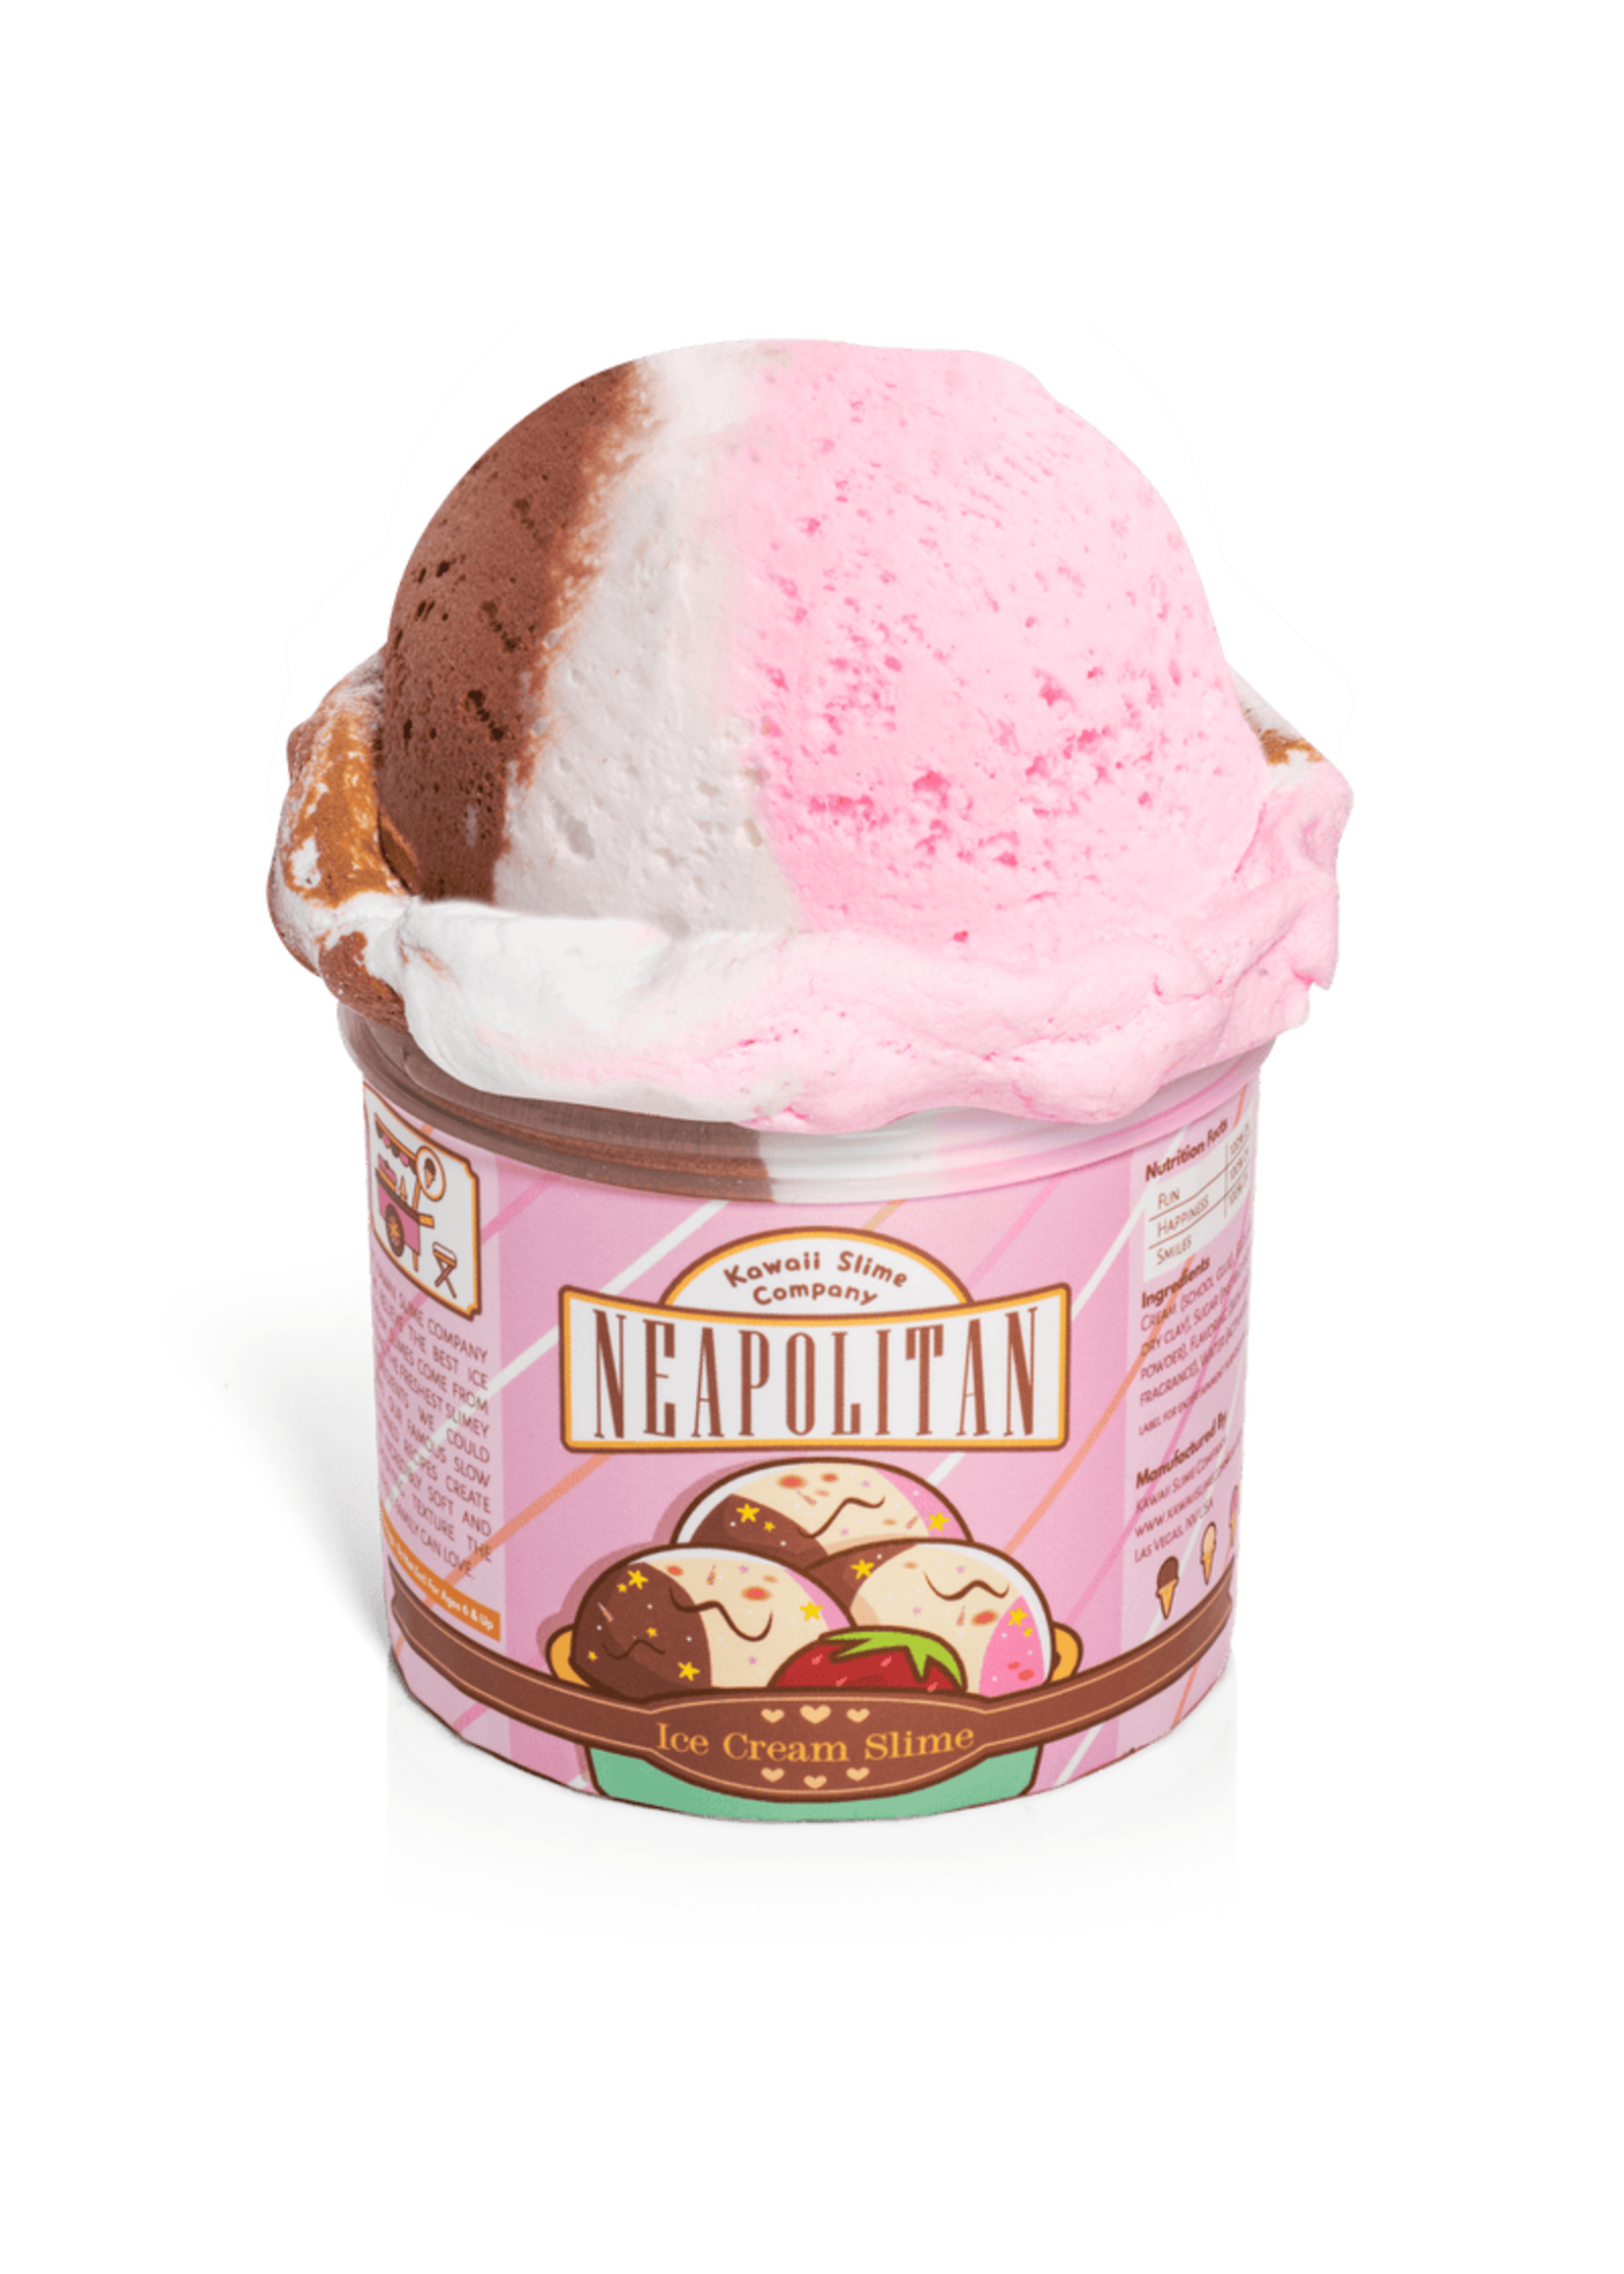 Kawaii Company "Neapolitan" Ice Cream Slime